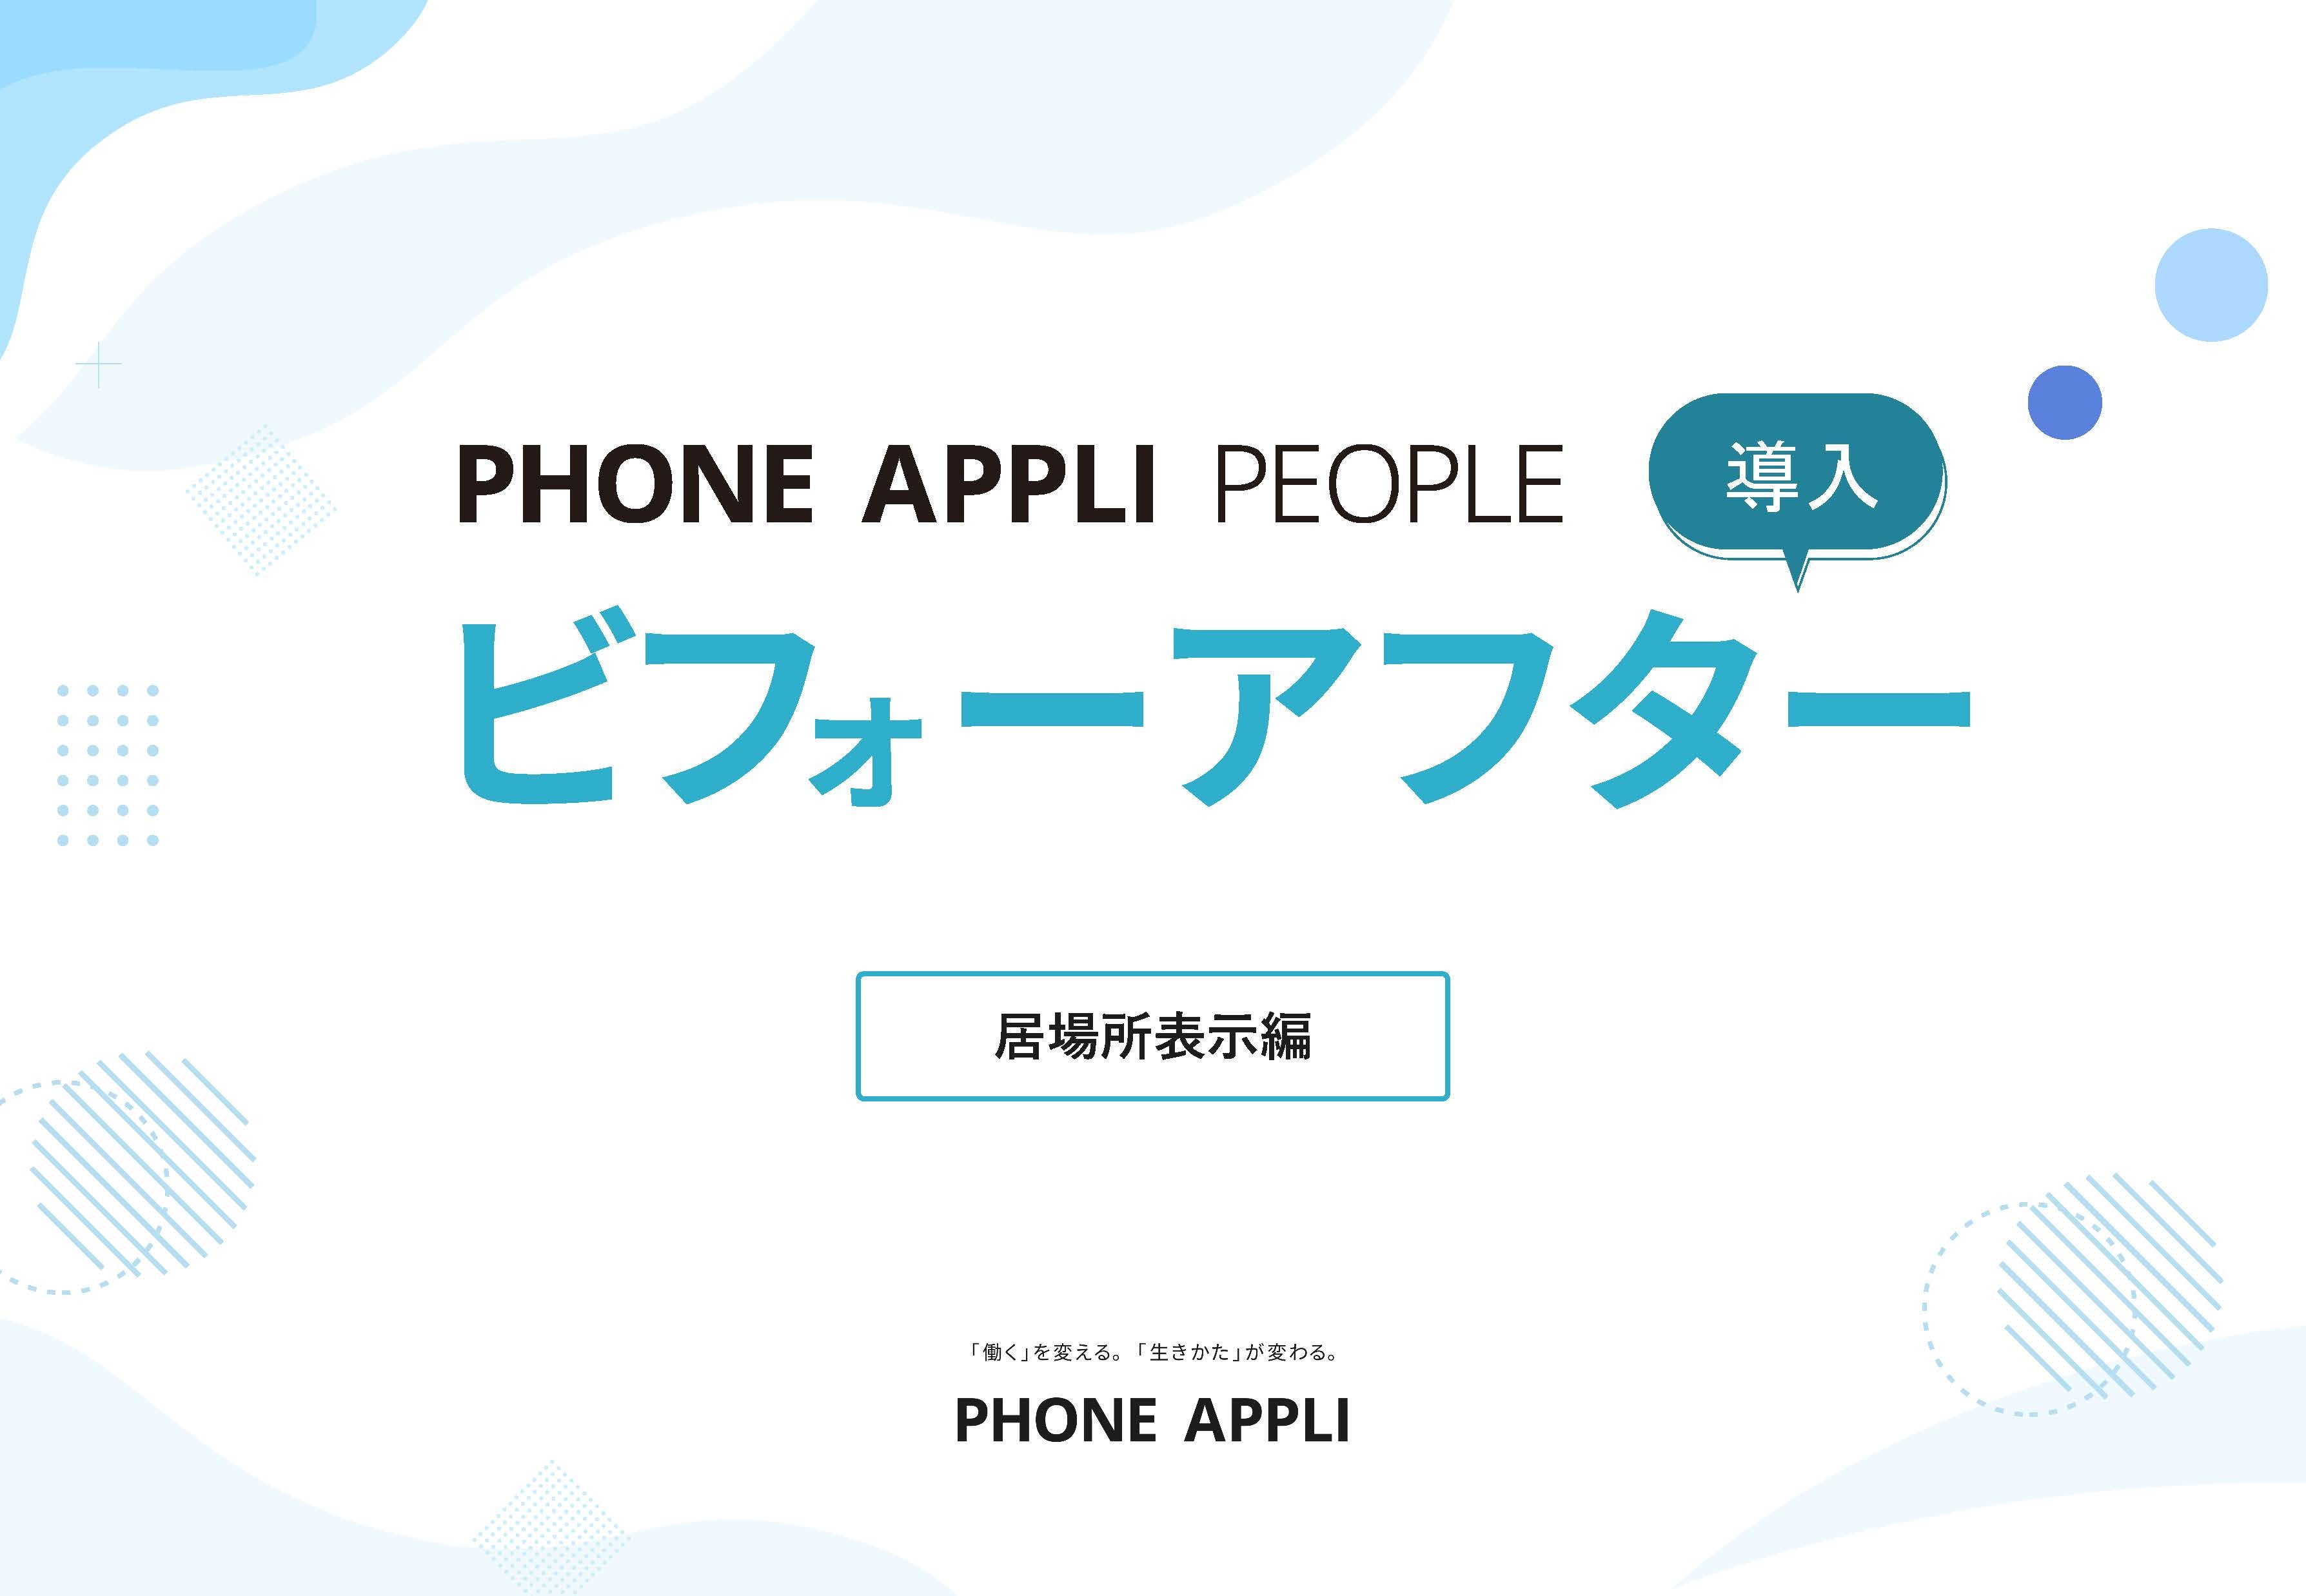 PHONE APPLI PEOPLE導入ビフォーアフター【居場所表示編】